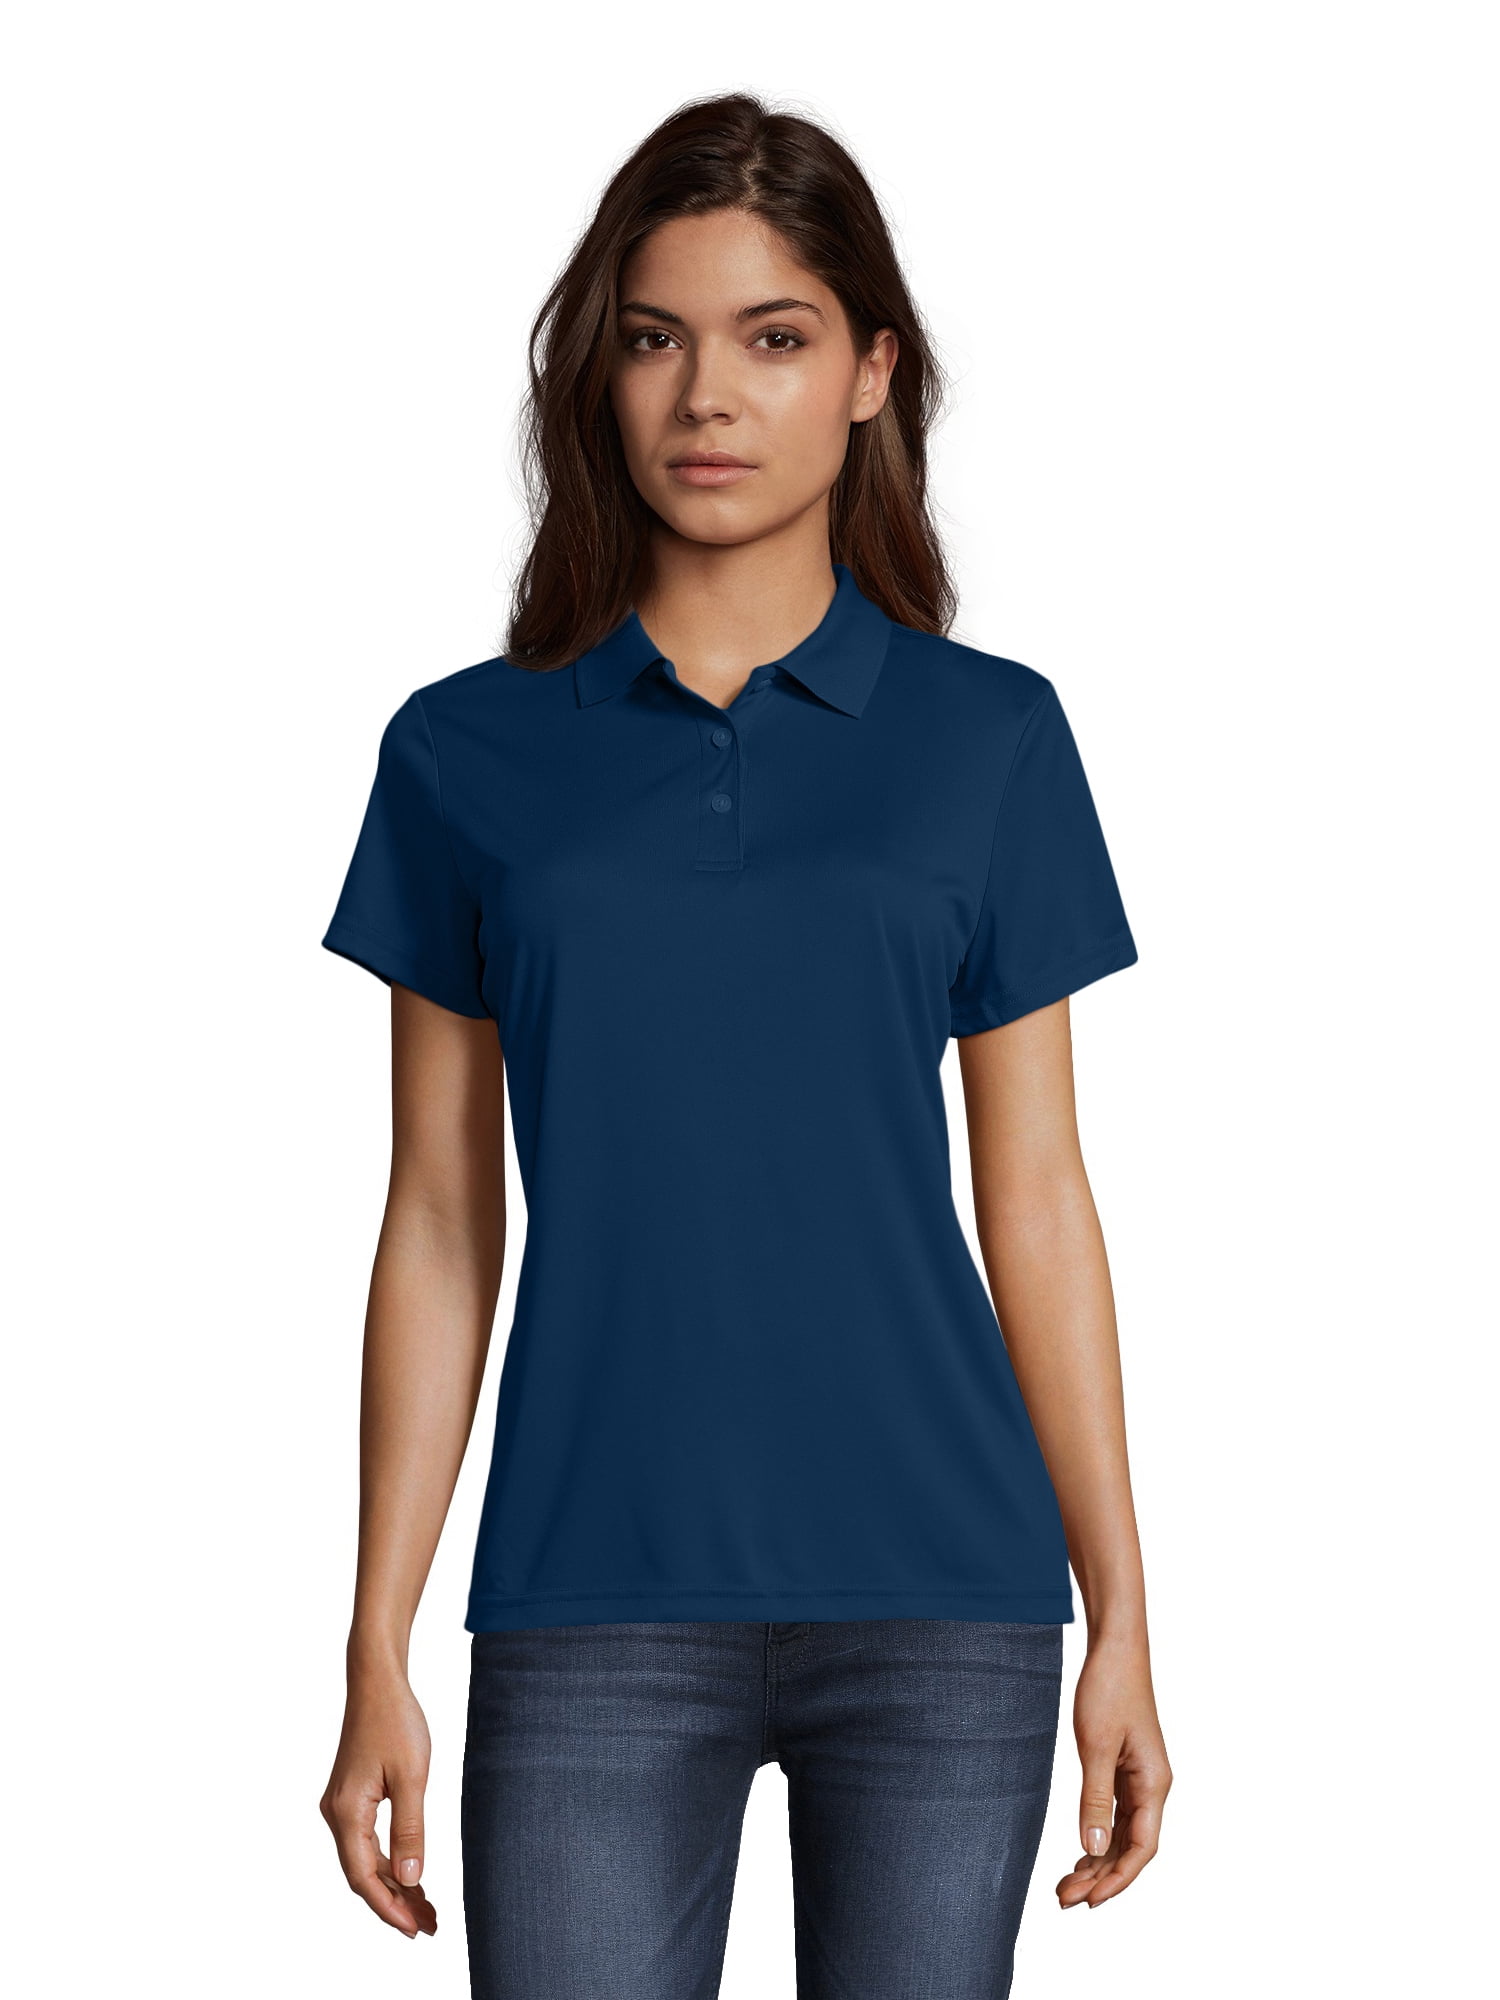 Hanes Women's Cooldri Short Sleeve Performance Polo Shirt - Walmart.com